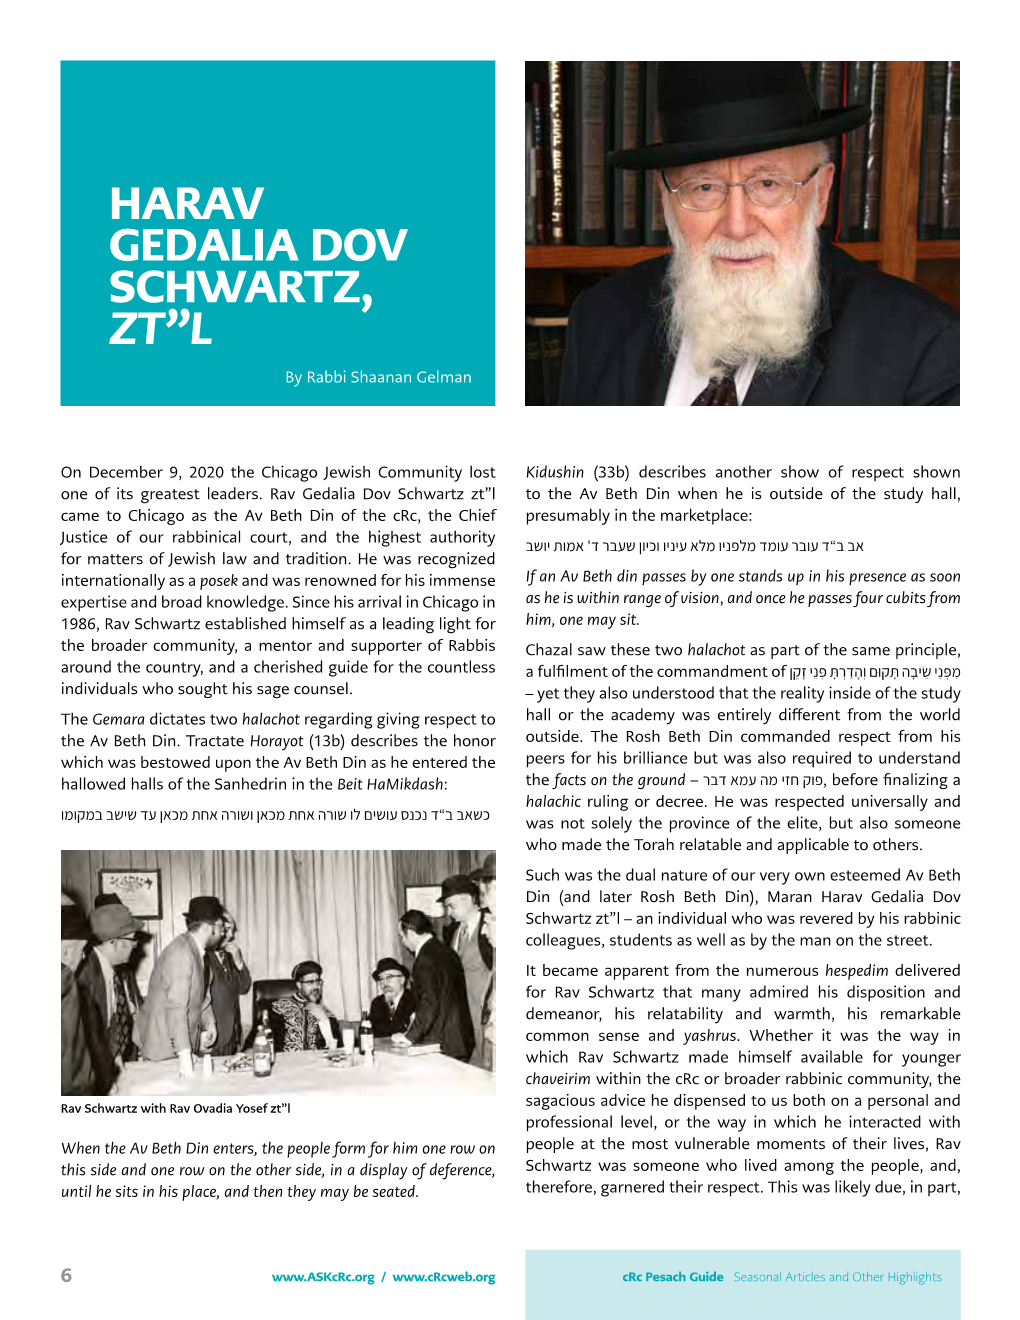 HARAV GEDALIA DOV SCHWARTZ, ZT”L by Rabbi Shaanan Gelman